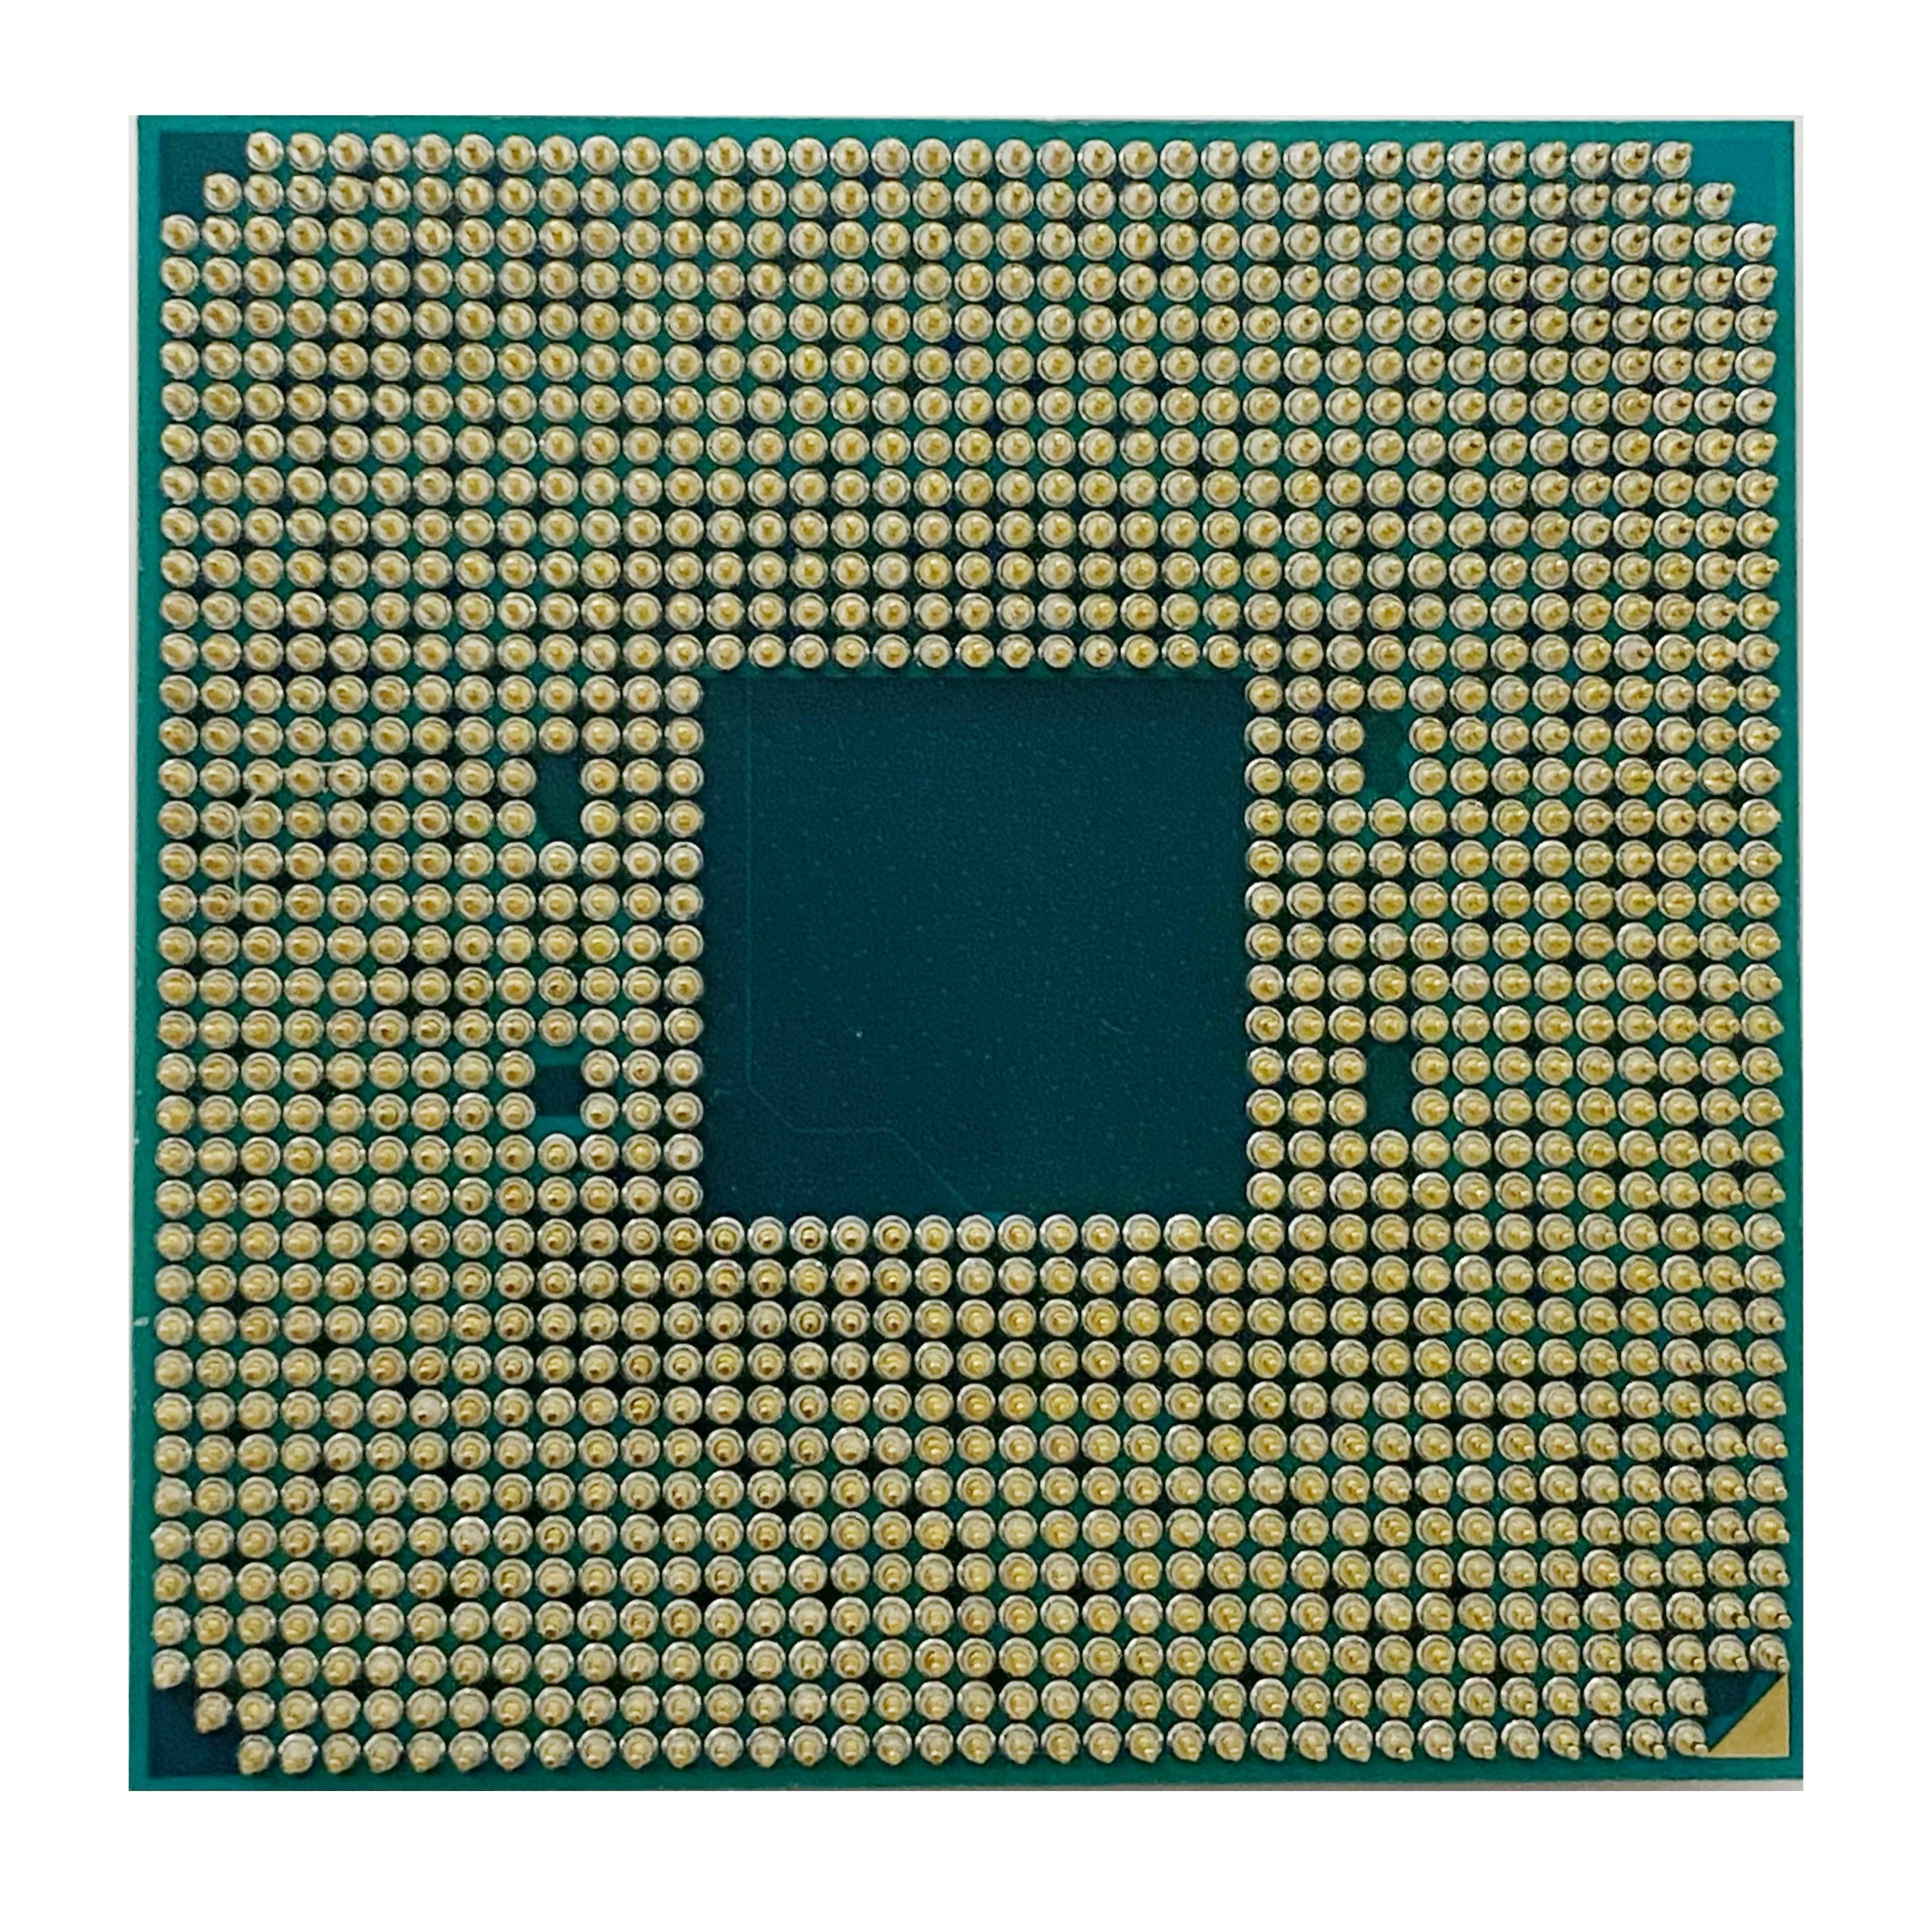 AMD Ryzen 5 1500X R5 1500X R5-1500X 3.5 GHz processore CPU Quad-Core a otto Core L3 = 16M 65W Socket AM4